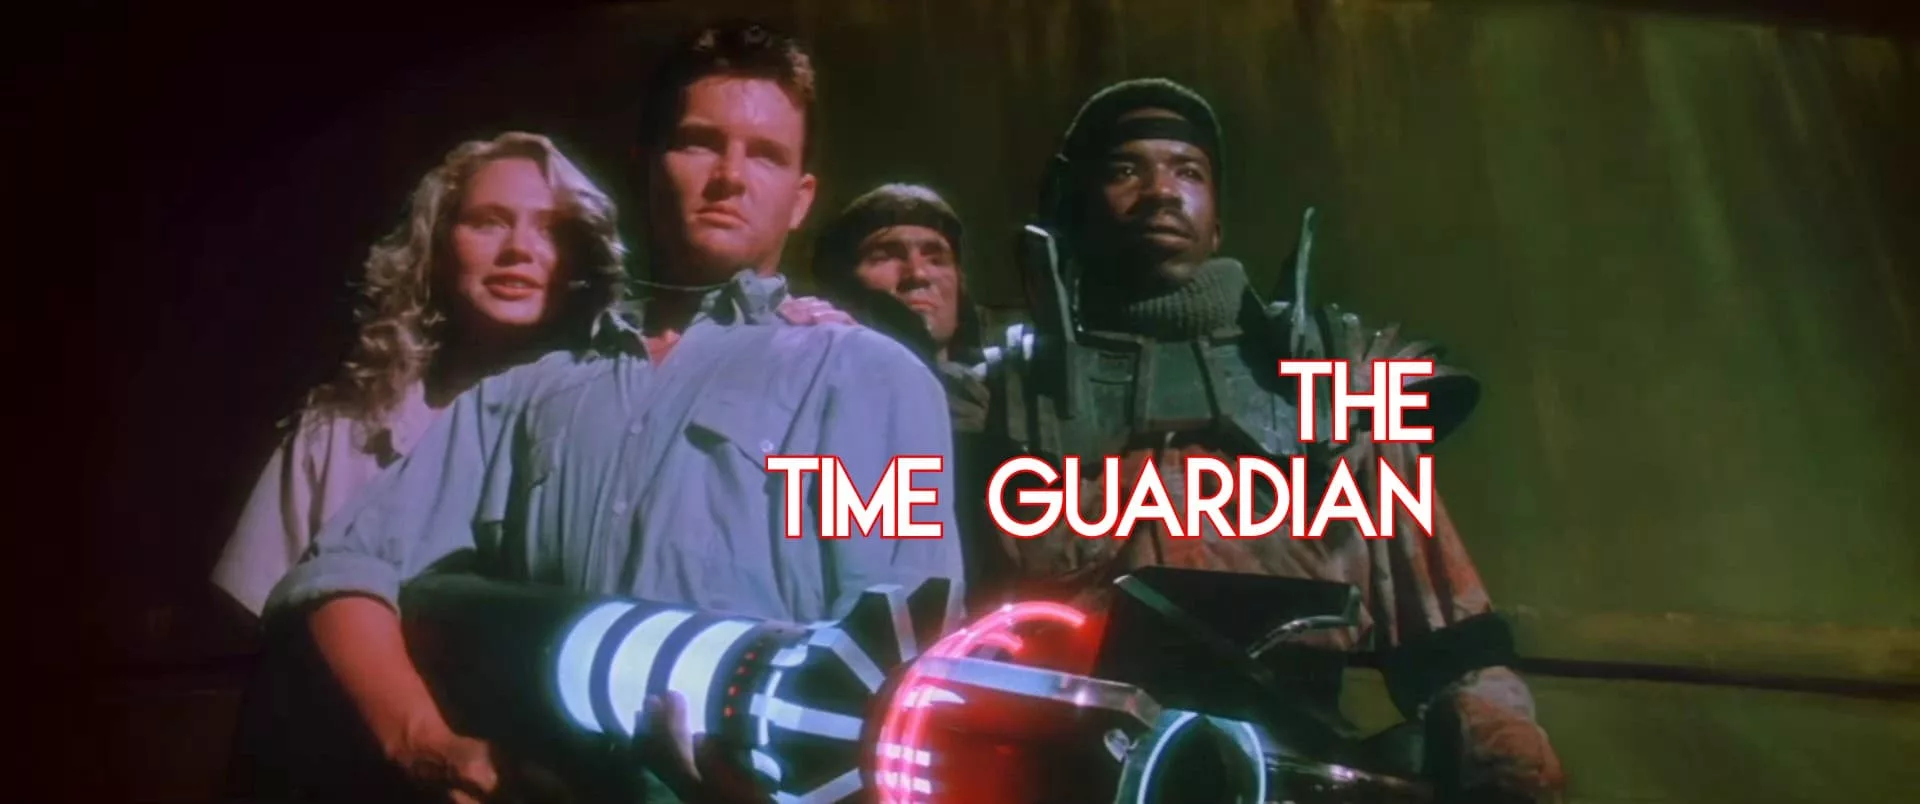 Time Guardian